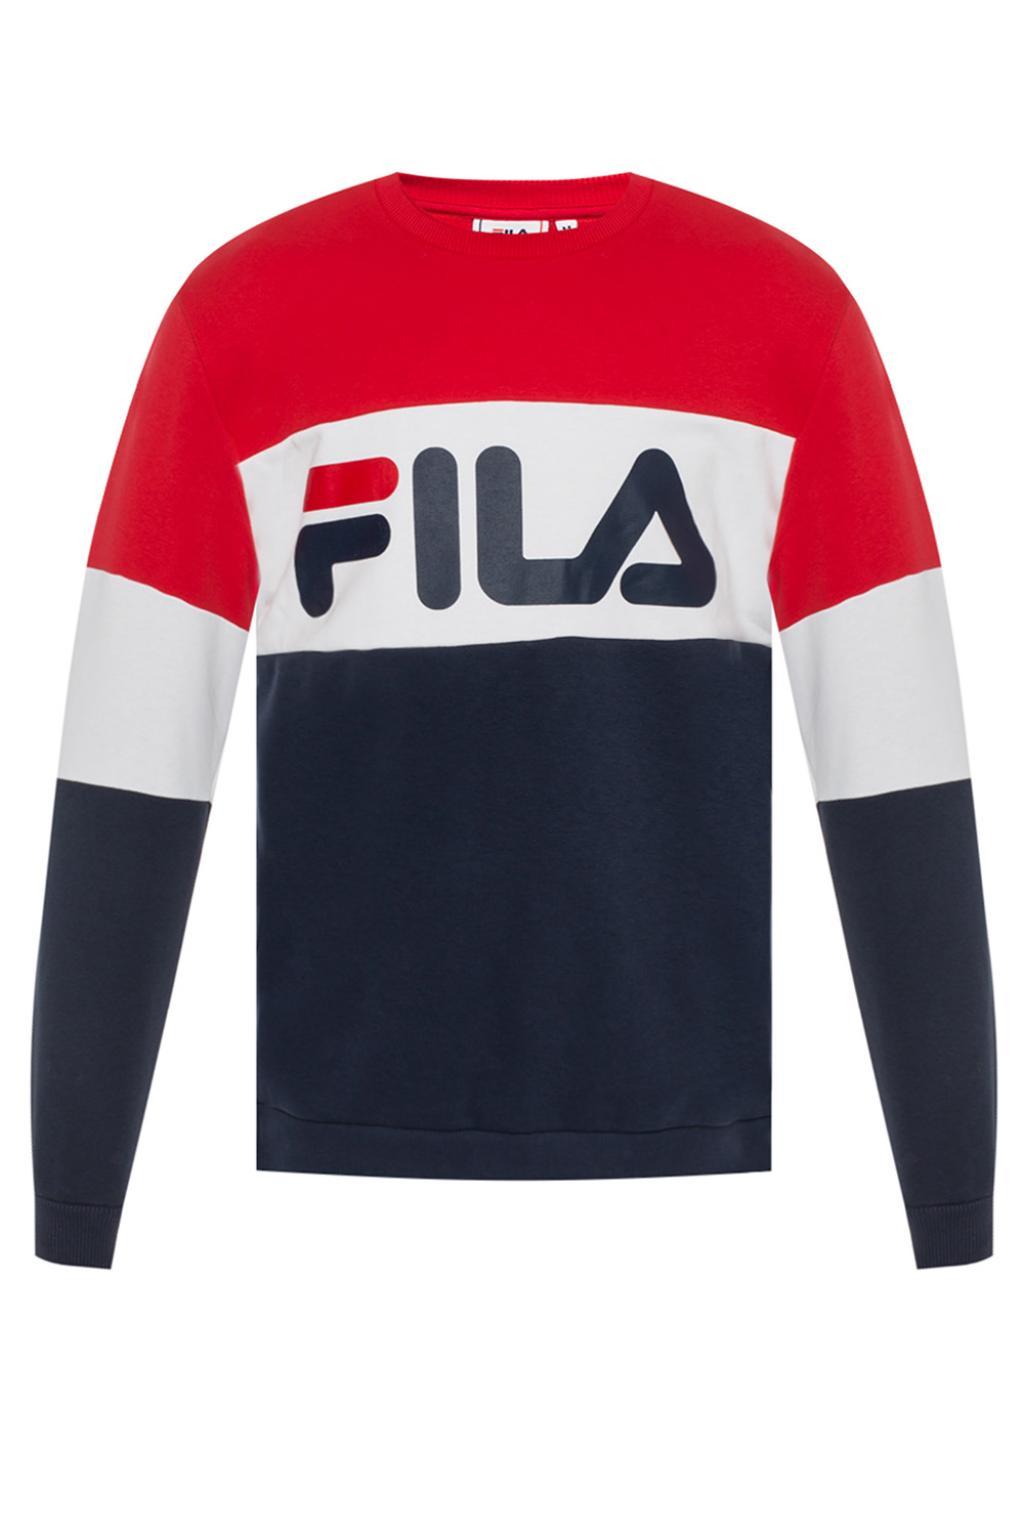 Fila Cotton Logo-printed Sweatshirt in Navy Blue (Blue) for Men - Save ...